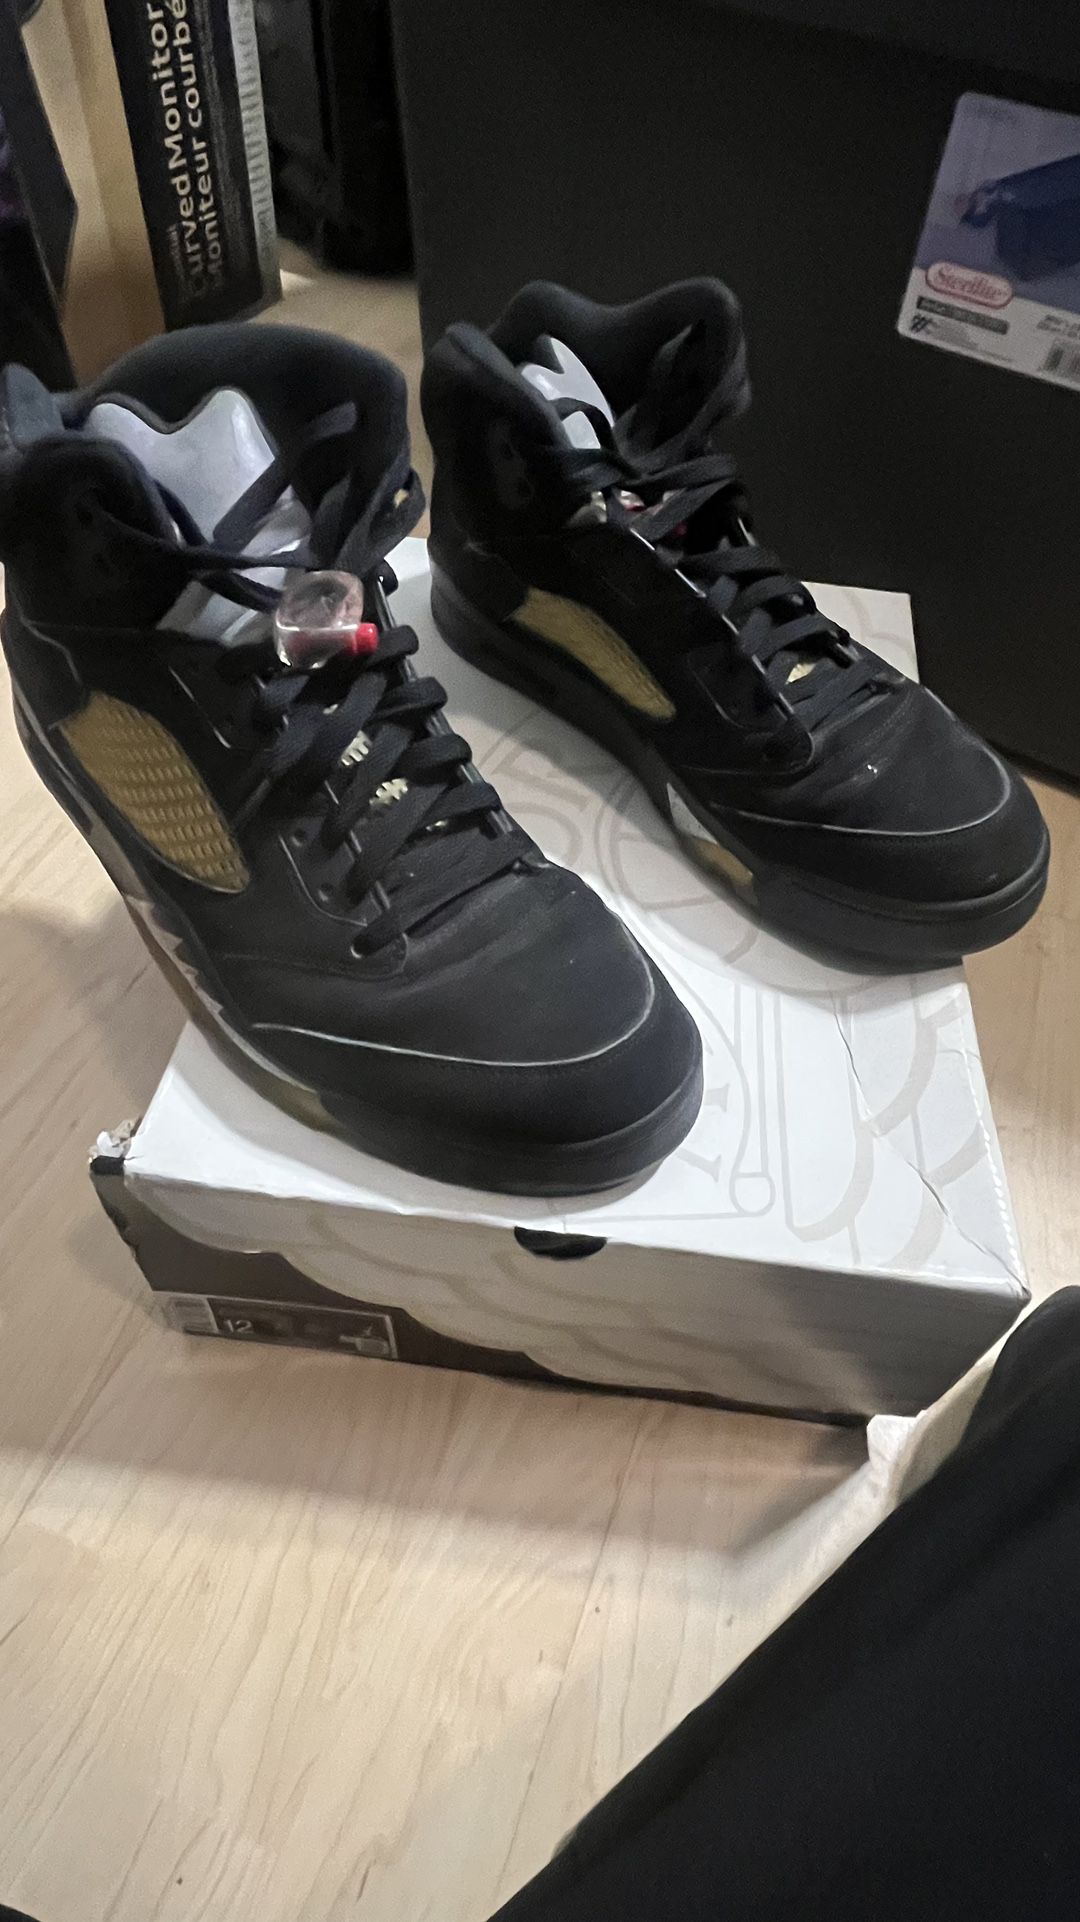 Nike Air Jordan 5 Retro Shoes - Men’s Size 12